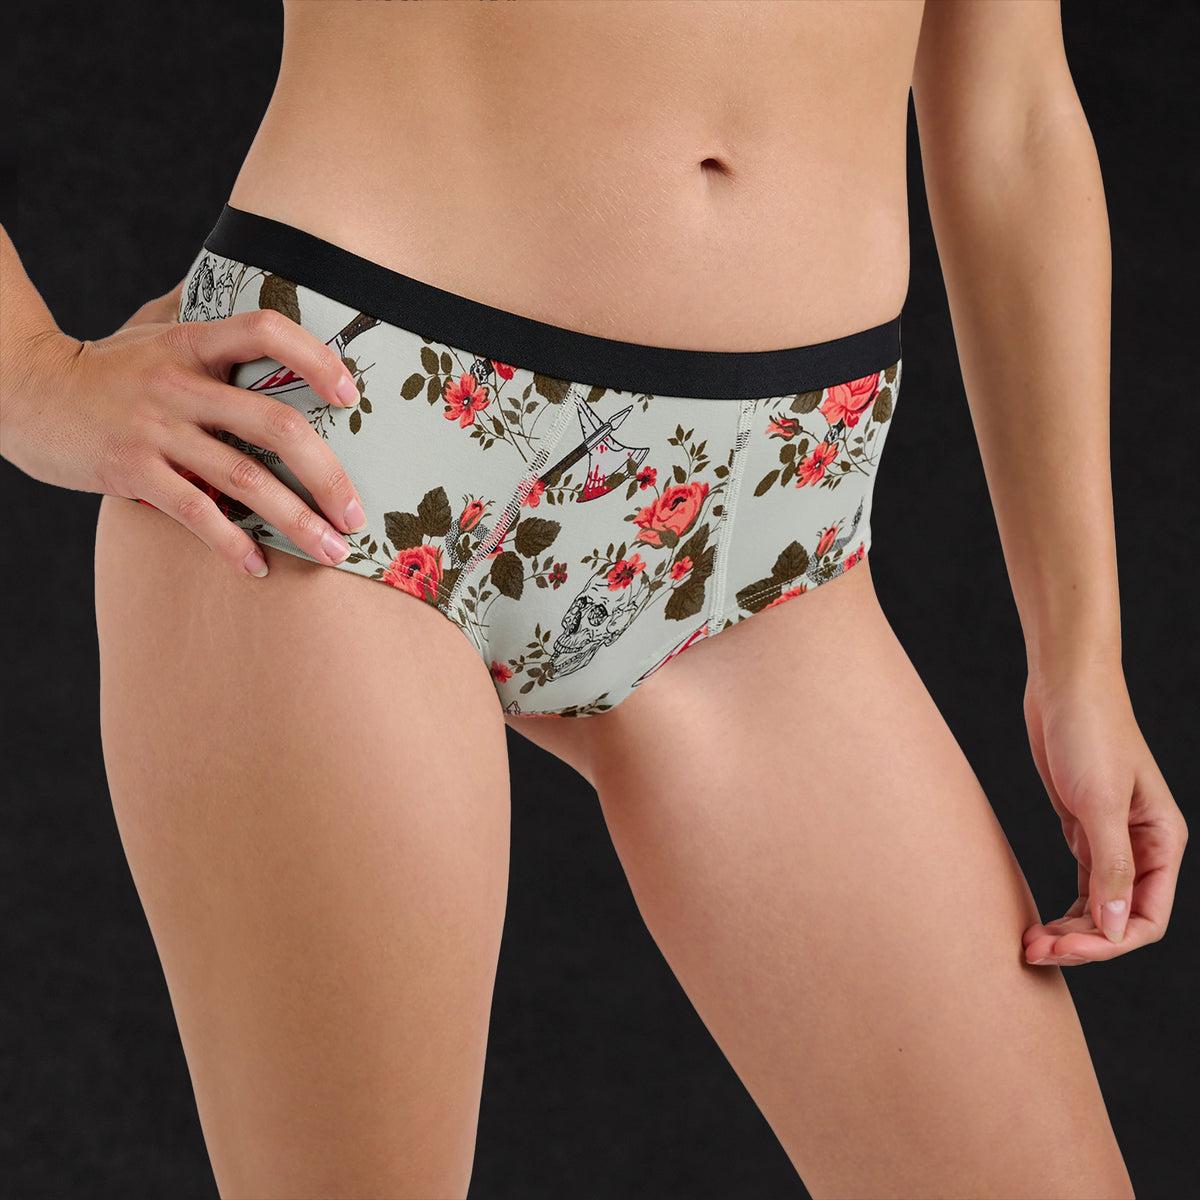 NEW MeUndies PURPLE SKULLS BRIEFS Underwear Mens SIZE SMALL LOT OF 2